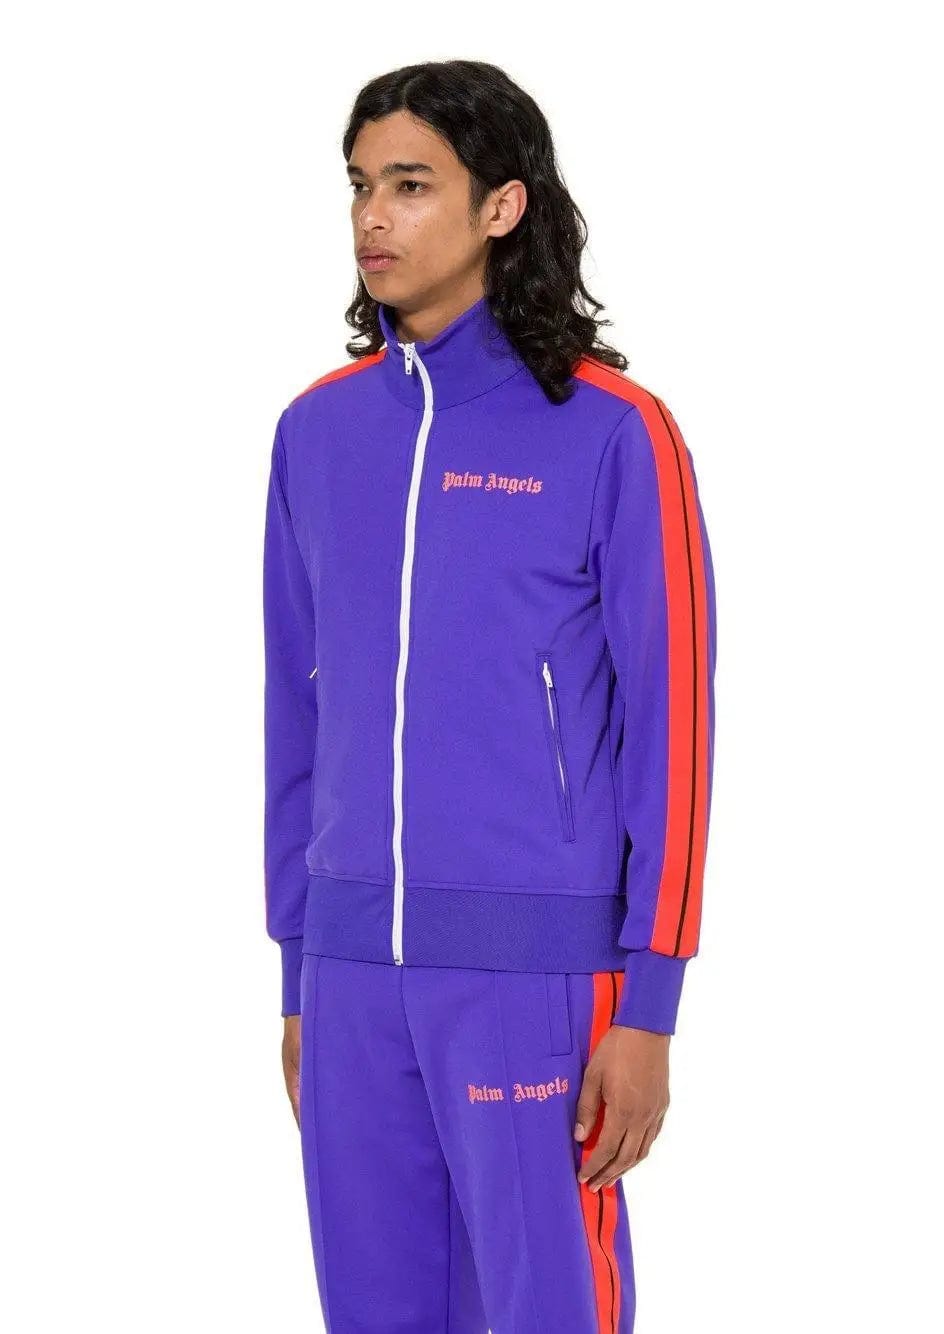 LOVEMI Jacket Men's Purple orange / M Lovemi -  The New Basic All-match Hip-hop Hit Color Zipper Sports